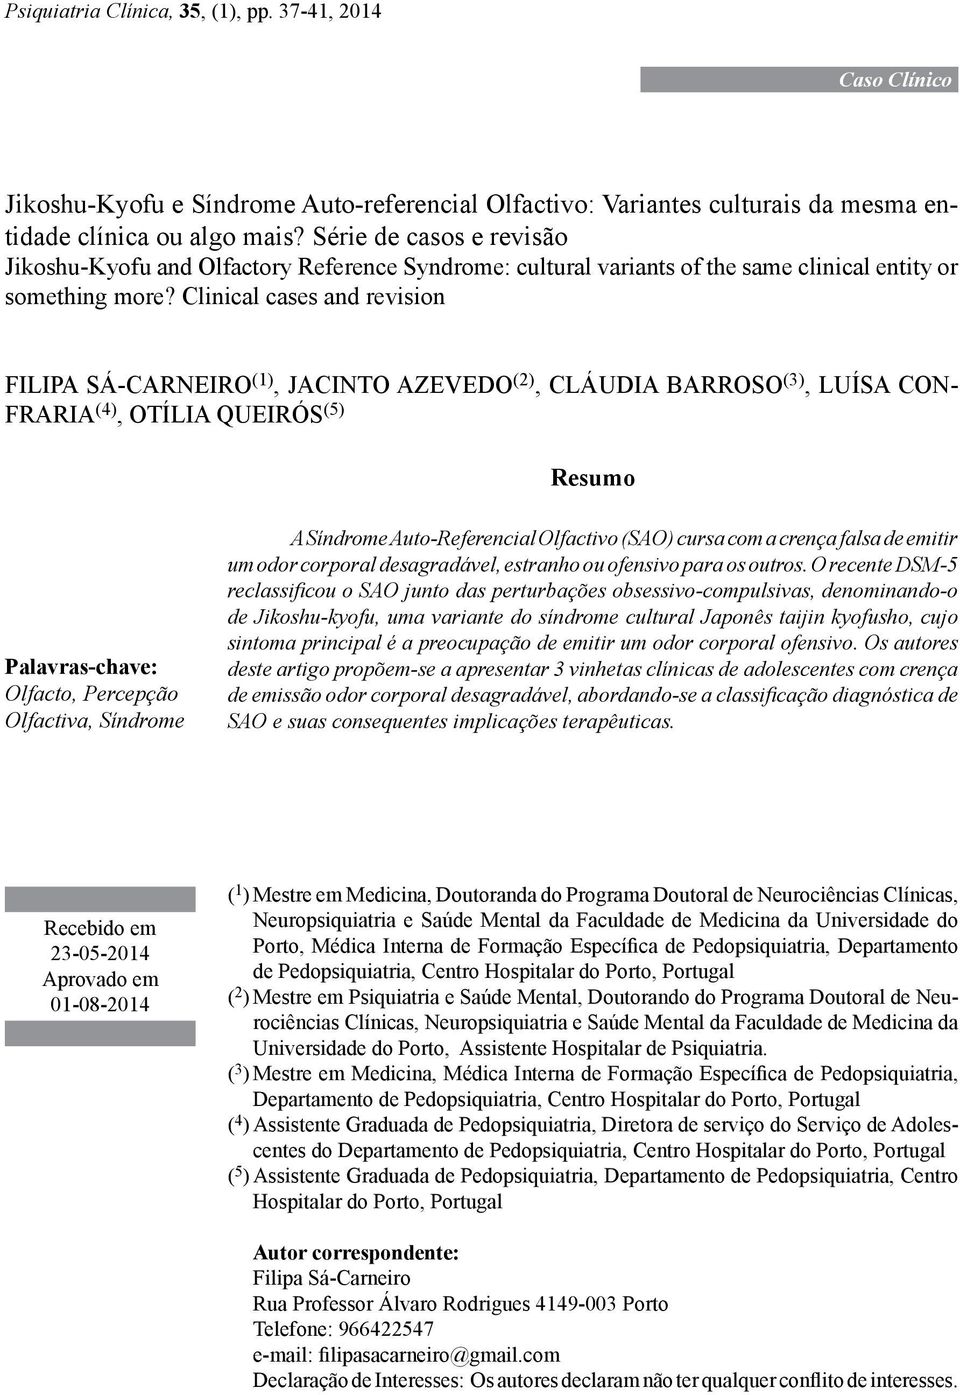 Clinical cases and revision Filipa Sá-Carneiro (1), Jacinto Azevedo (2), Cláudia Barroso (3), Luísa Confraria (4), Otília Queirós (5) Olfacto, Percepção Olfactiva, Síndrome A Síndrome